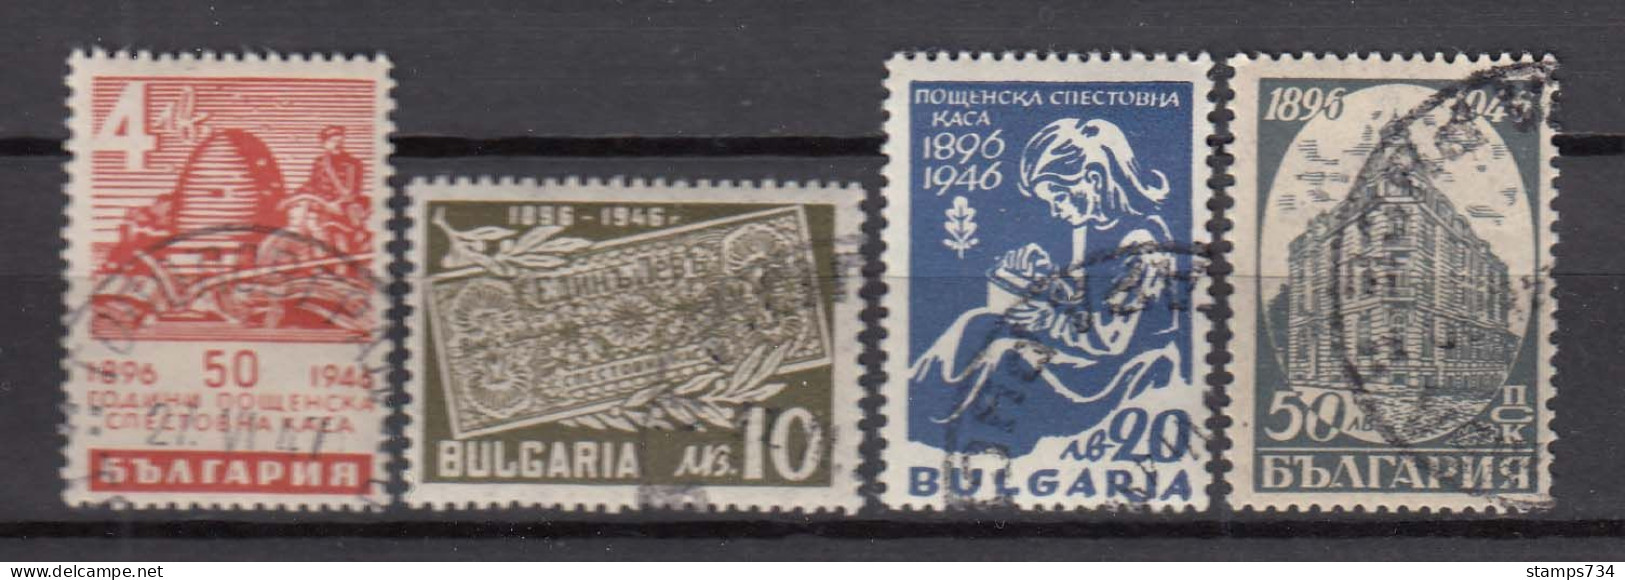 Bulgaria 1946 - 50 Jahre Bulgarische Postsparkasse, Mi-Nr. 524/27, Used (O) - Used Stamps